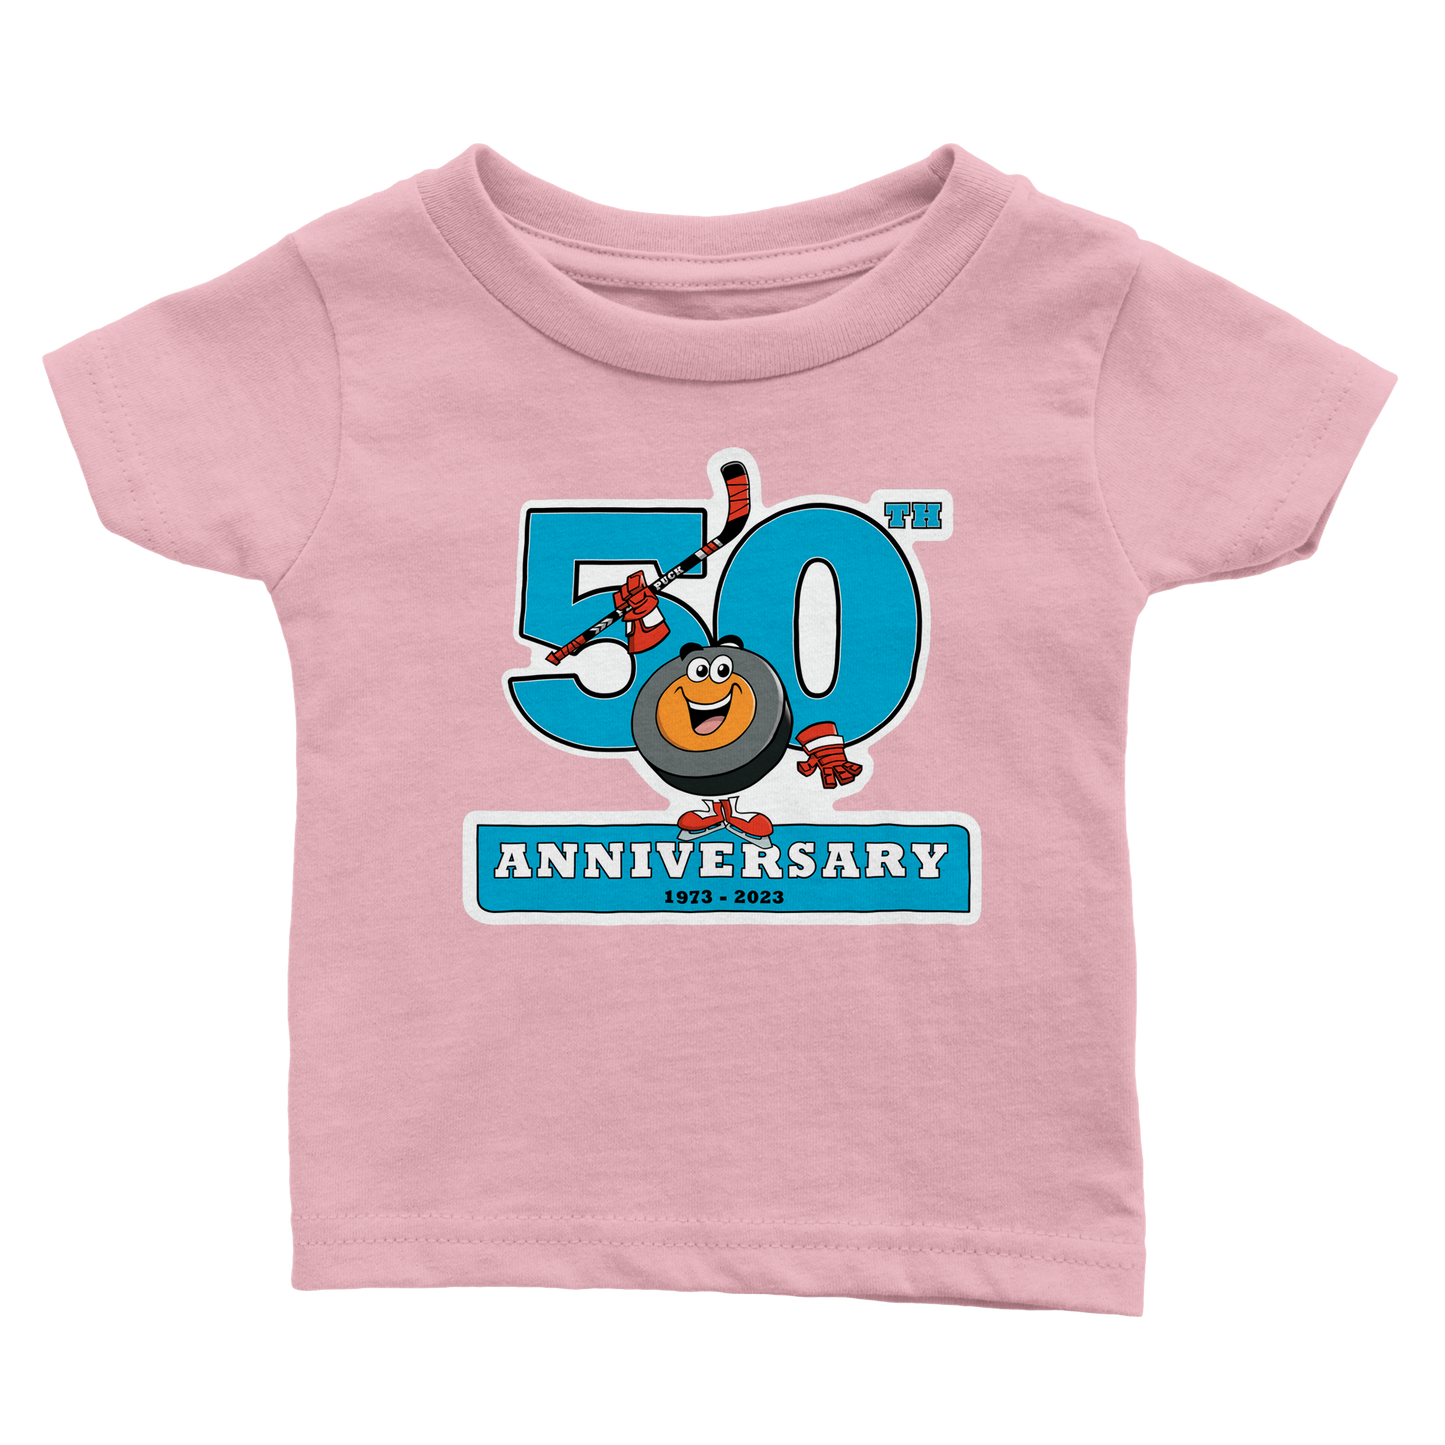 Peter's 50th Anniversary Classic Baby Crewneck T-shirt